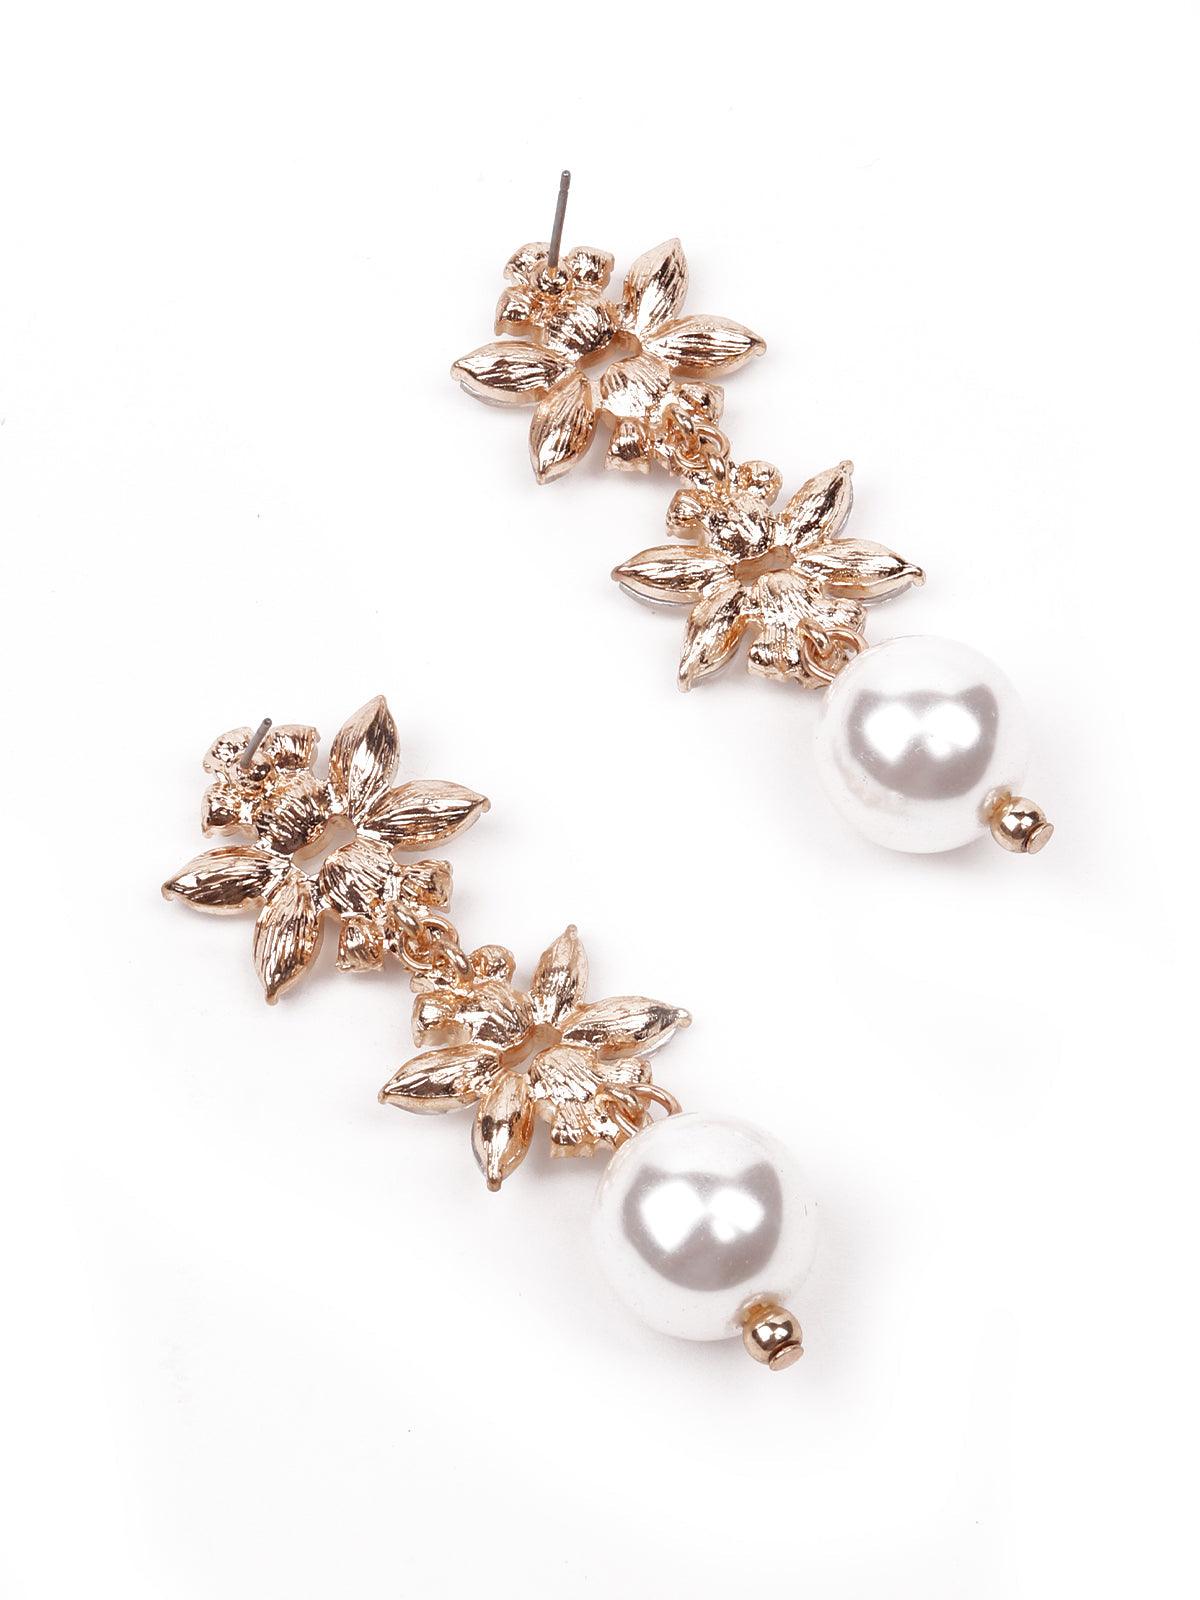 Gorgeous sparkling floral drop earrings - Odette